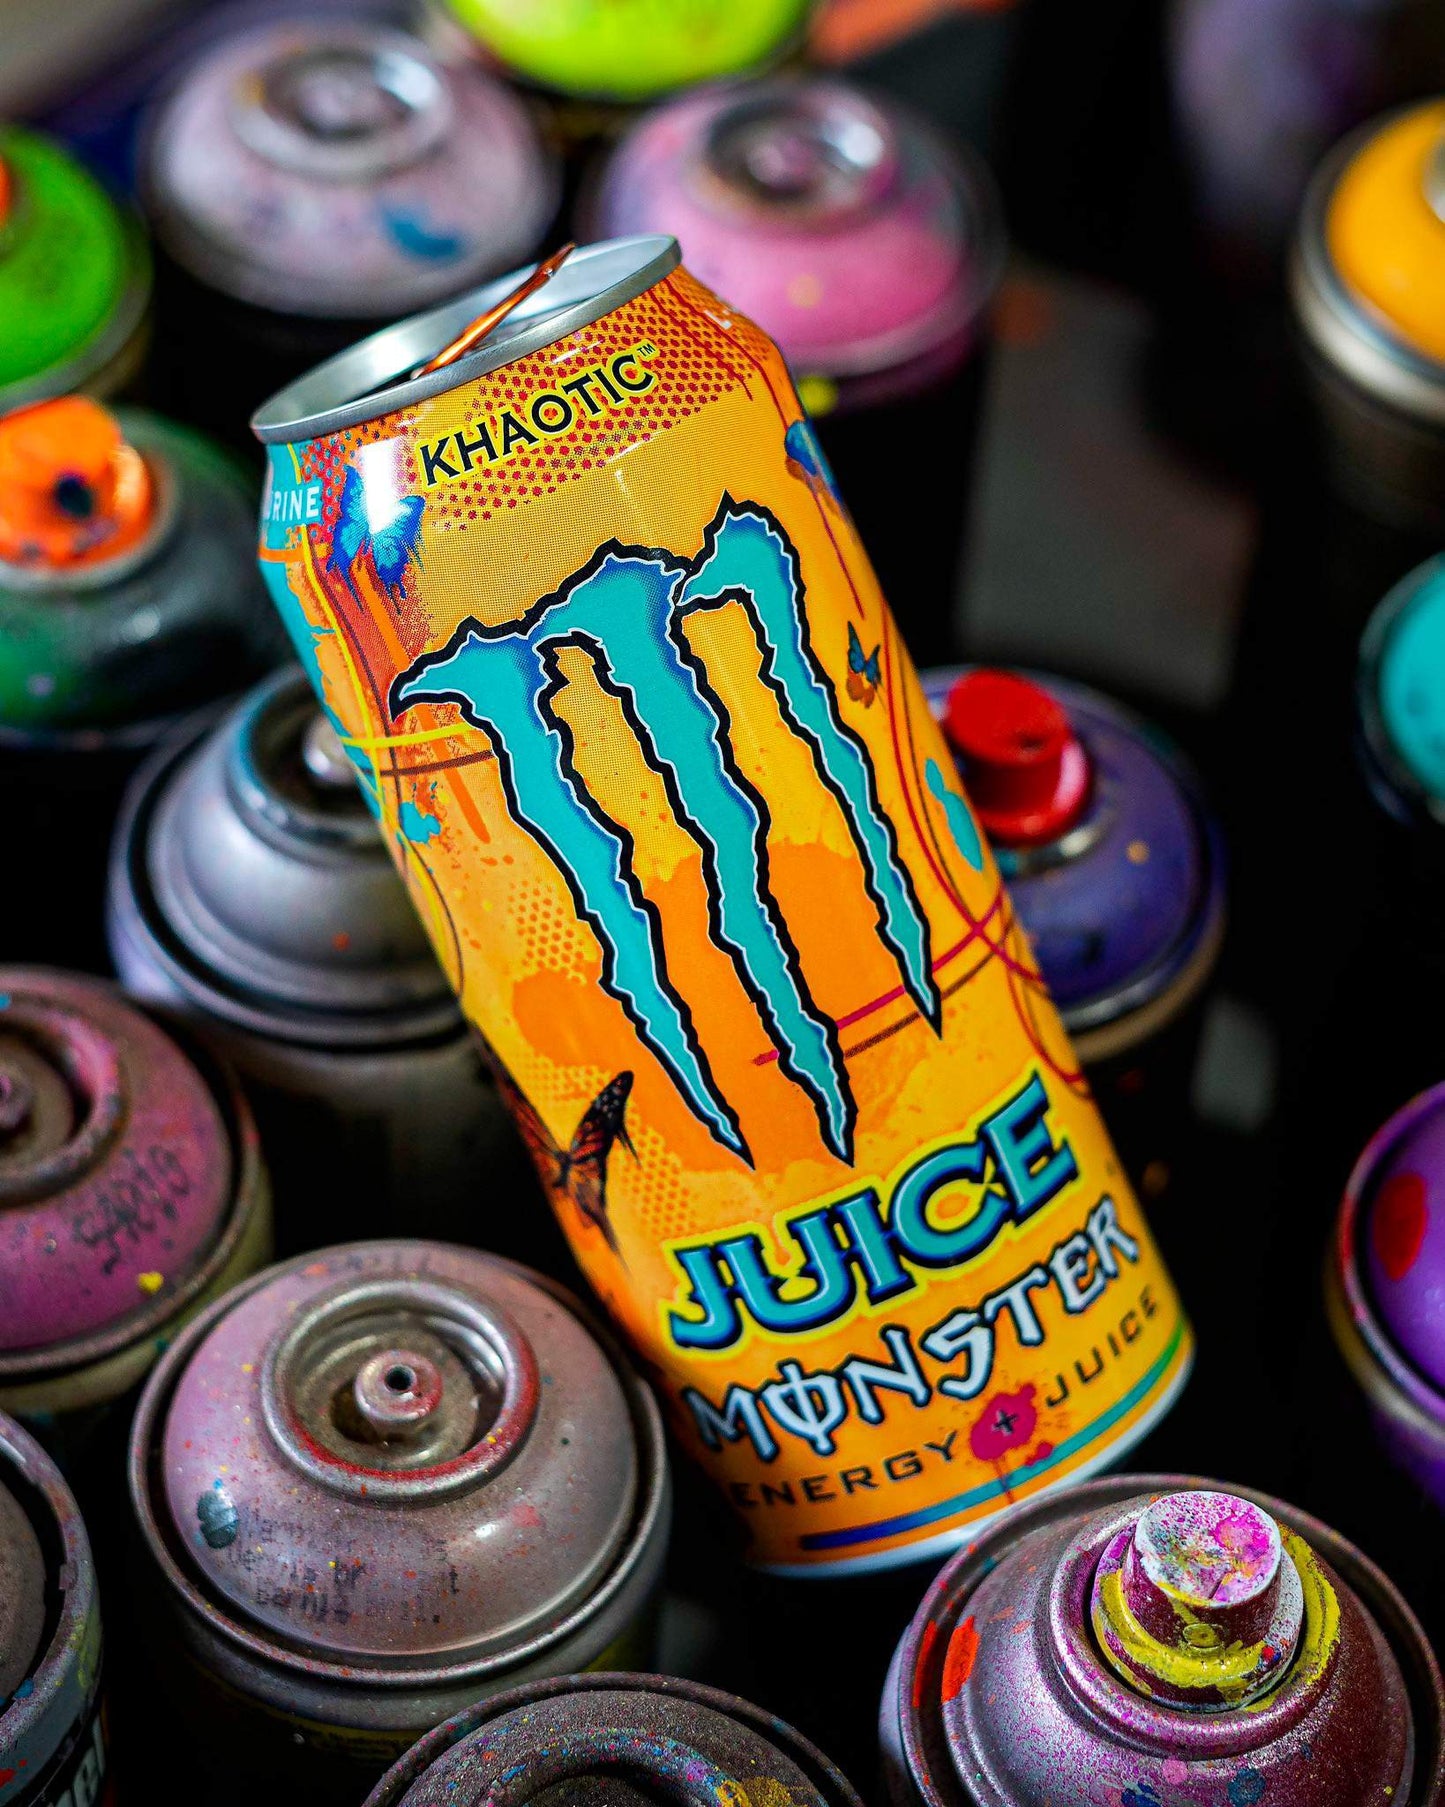 Monster Energy Juice Khaotic 0321B N-Monster-energy,energy drink,monster,monster energy,soon